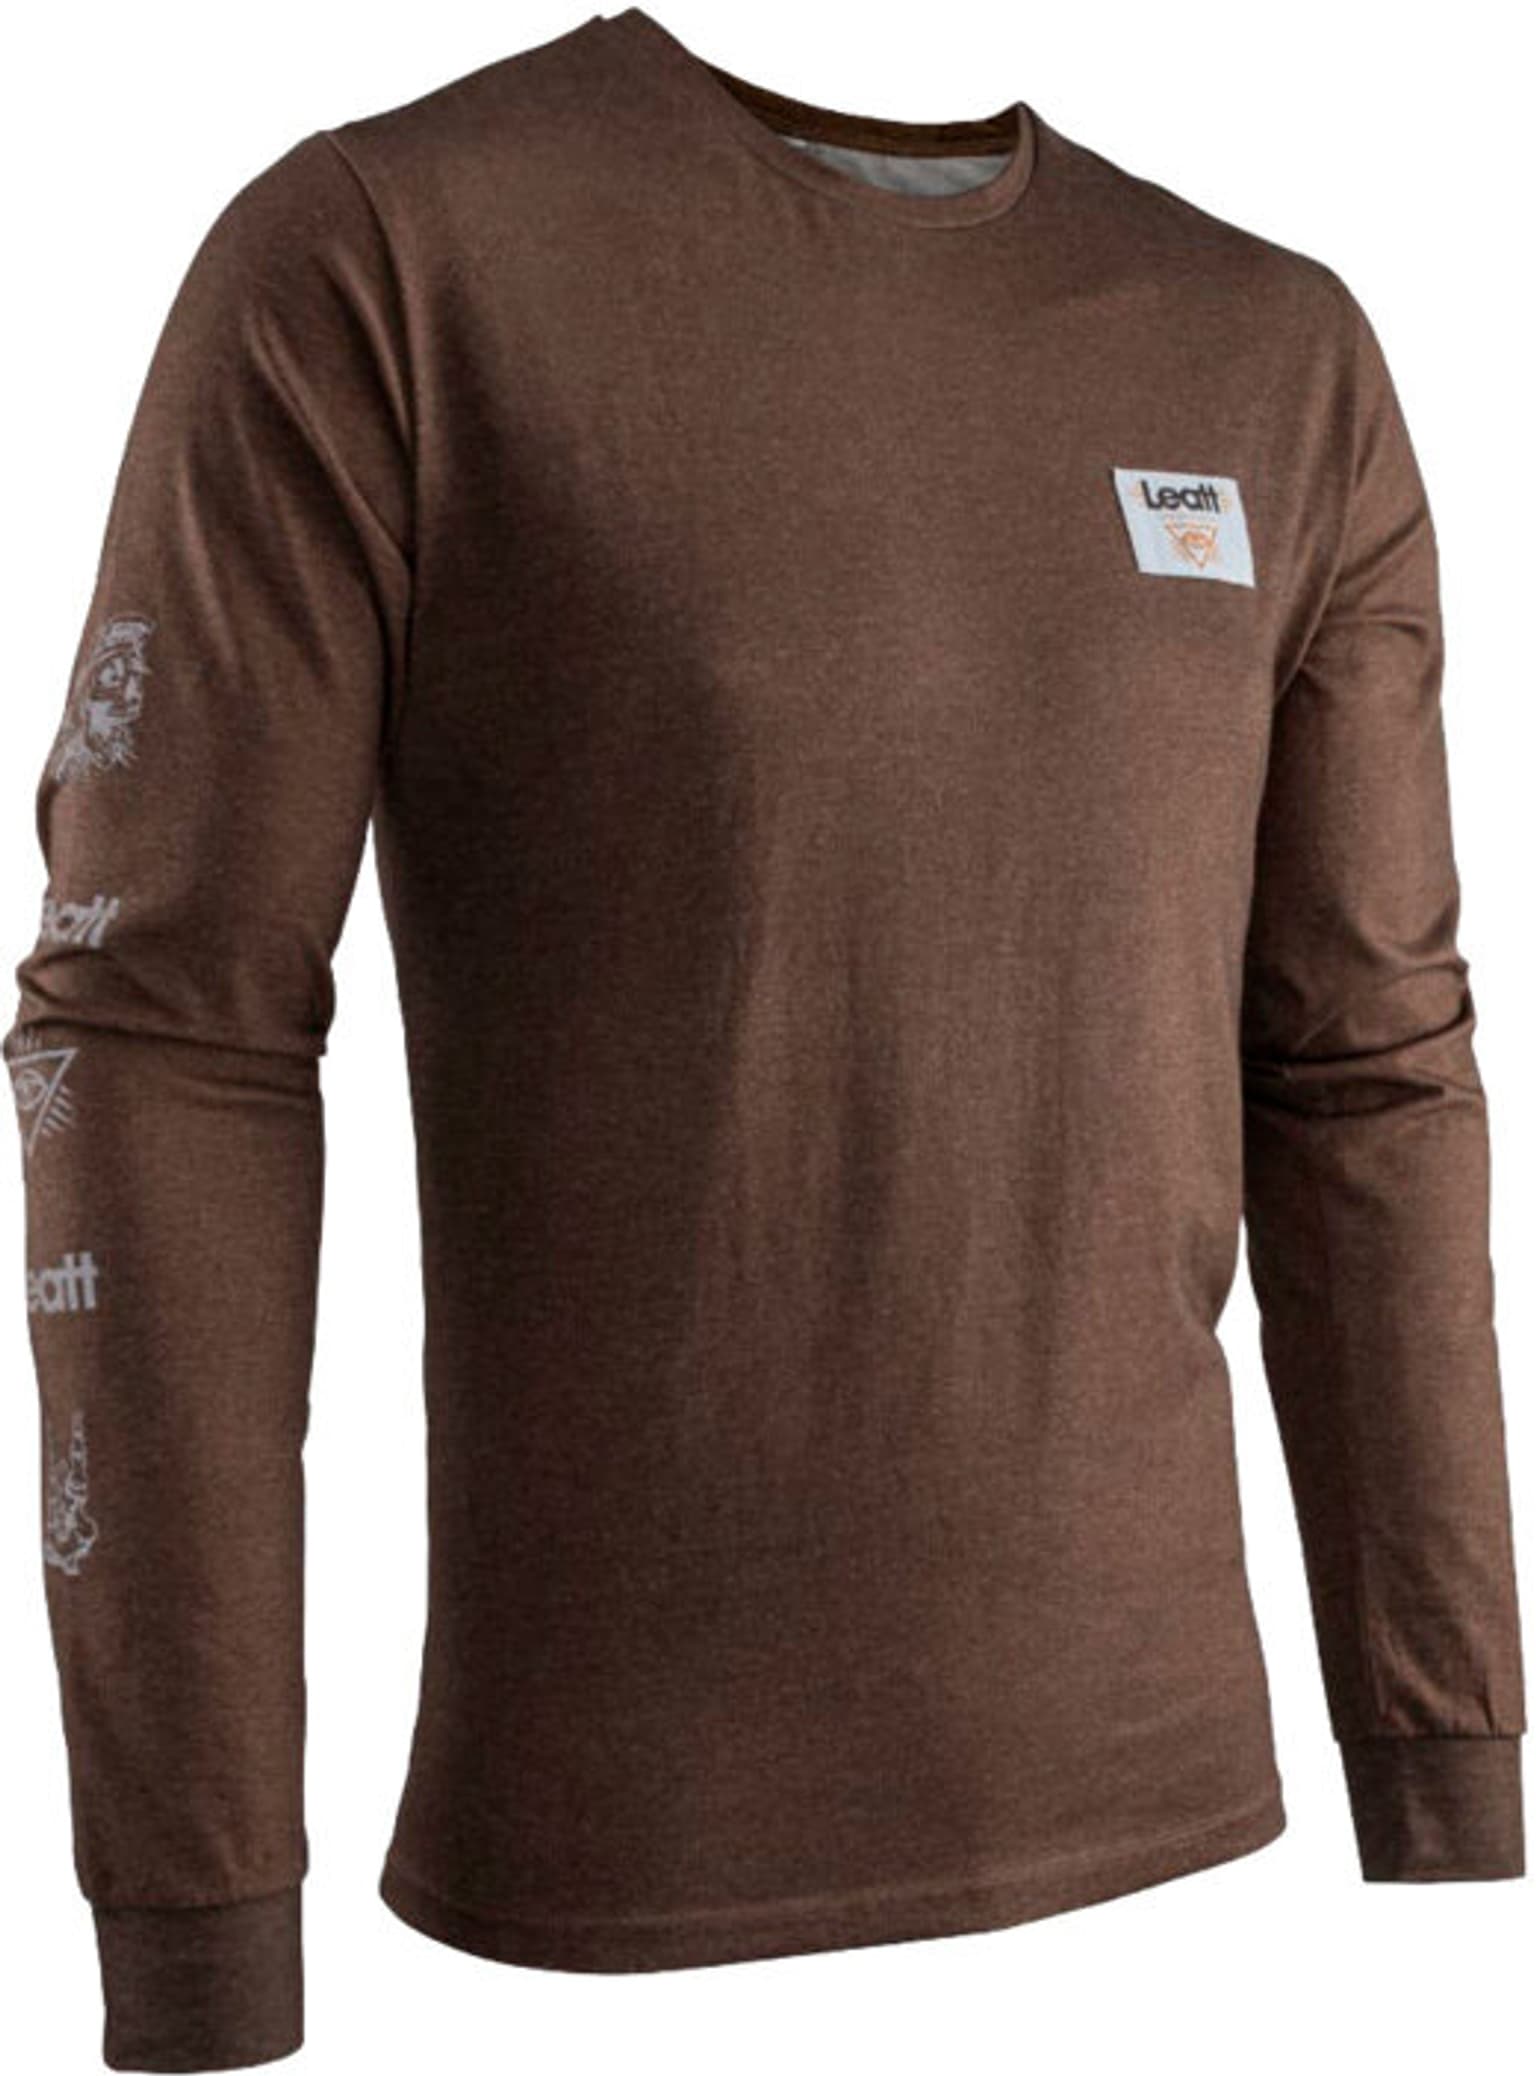 Leatt Leatt Core Long Shirt Chemise à manches longues brun 1